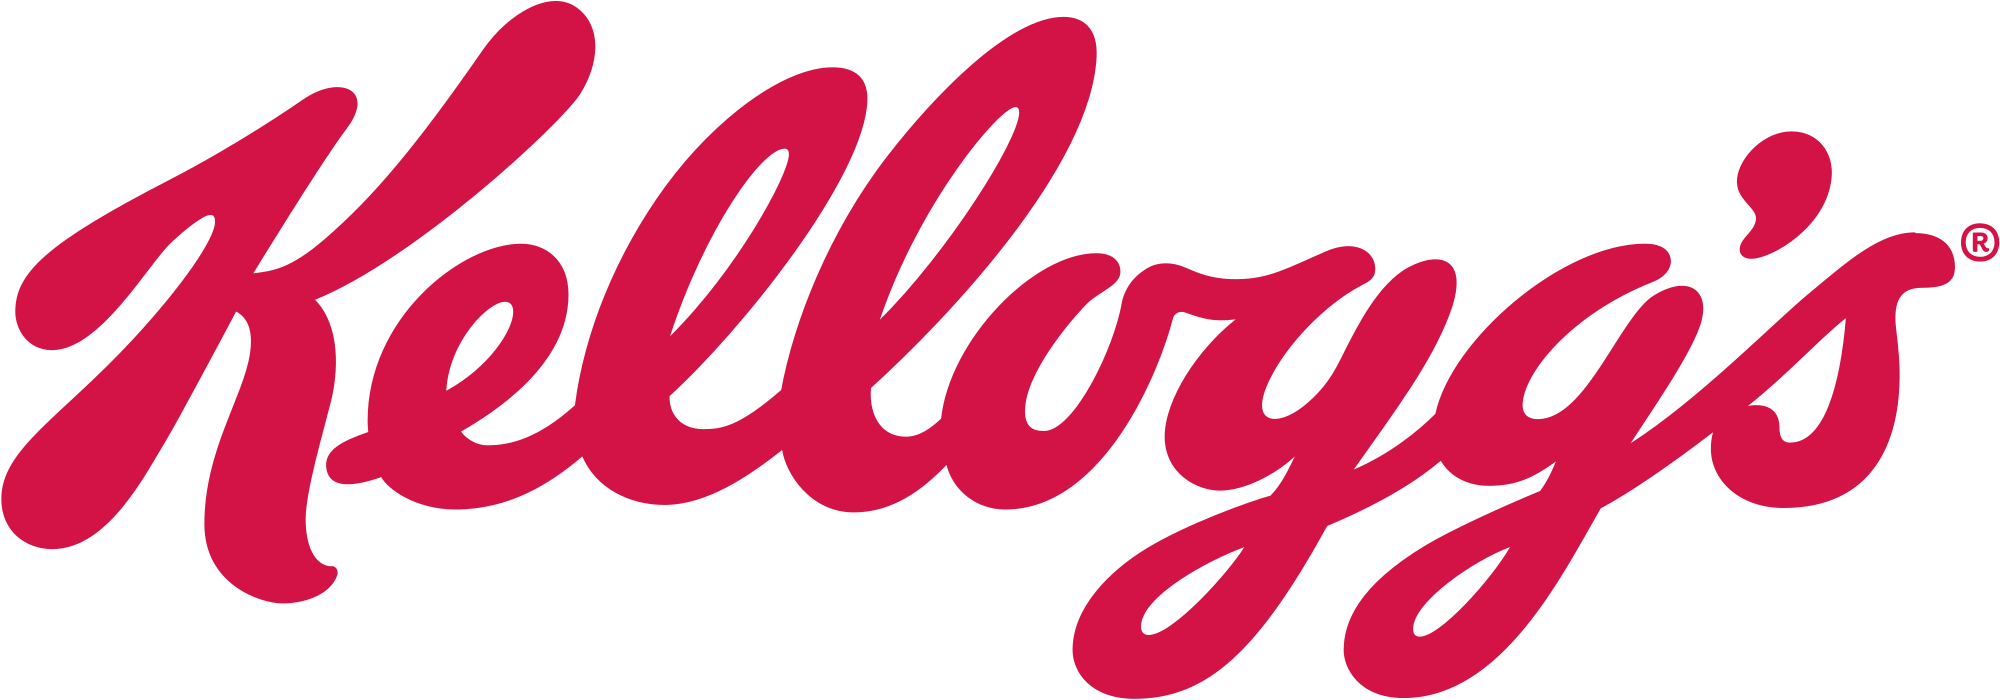 2000px-Kellogg's-Logo.svg.png